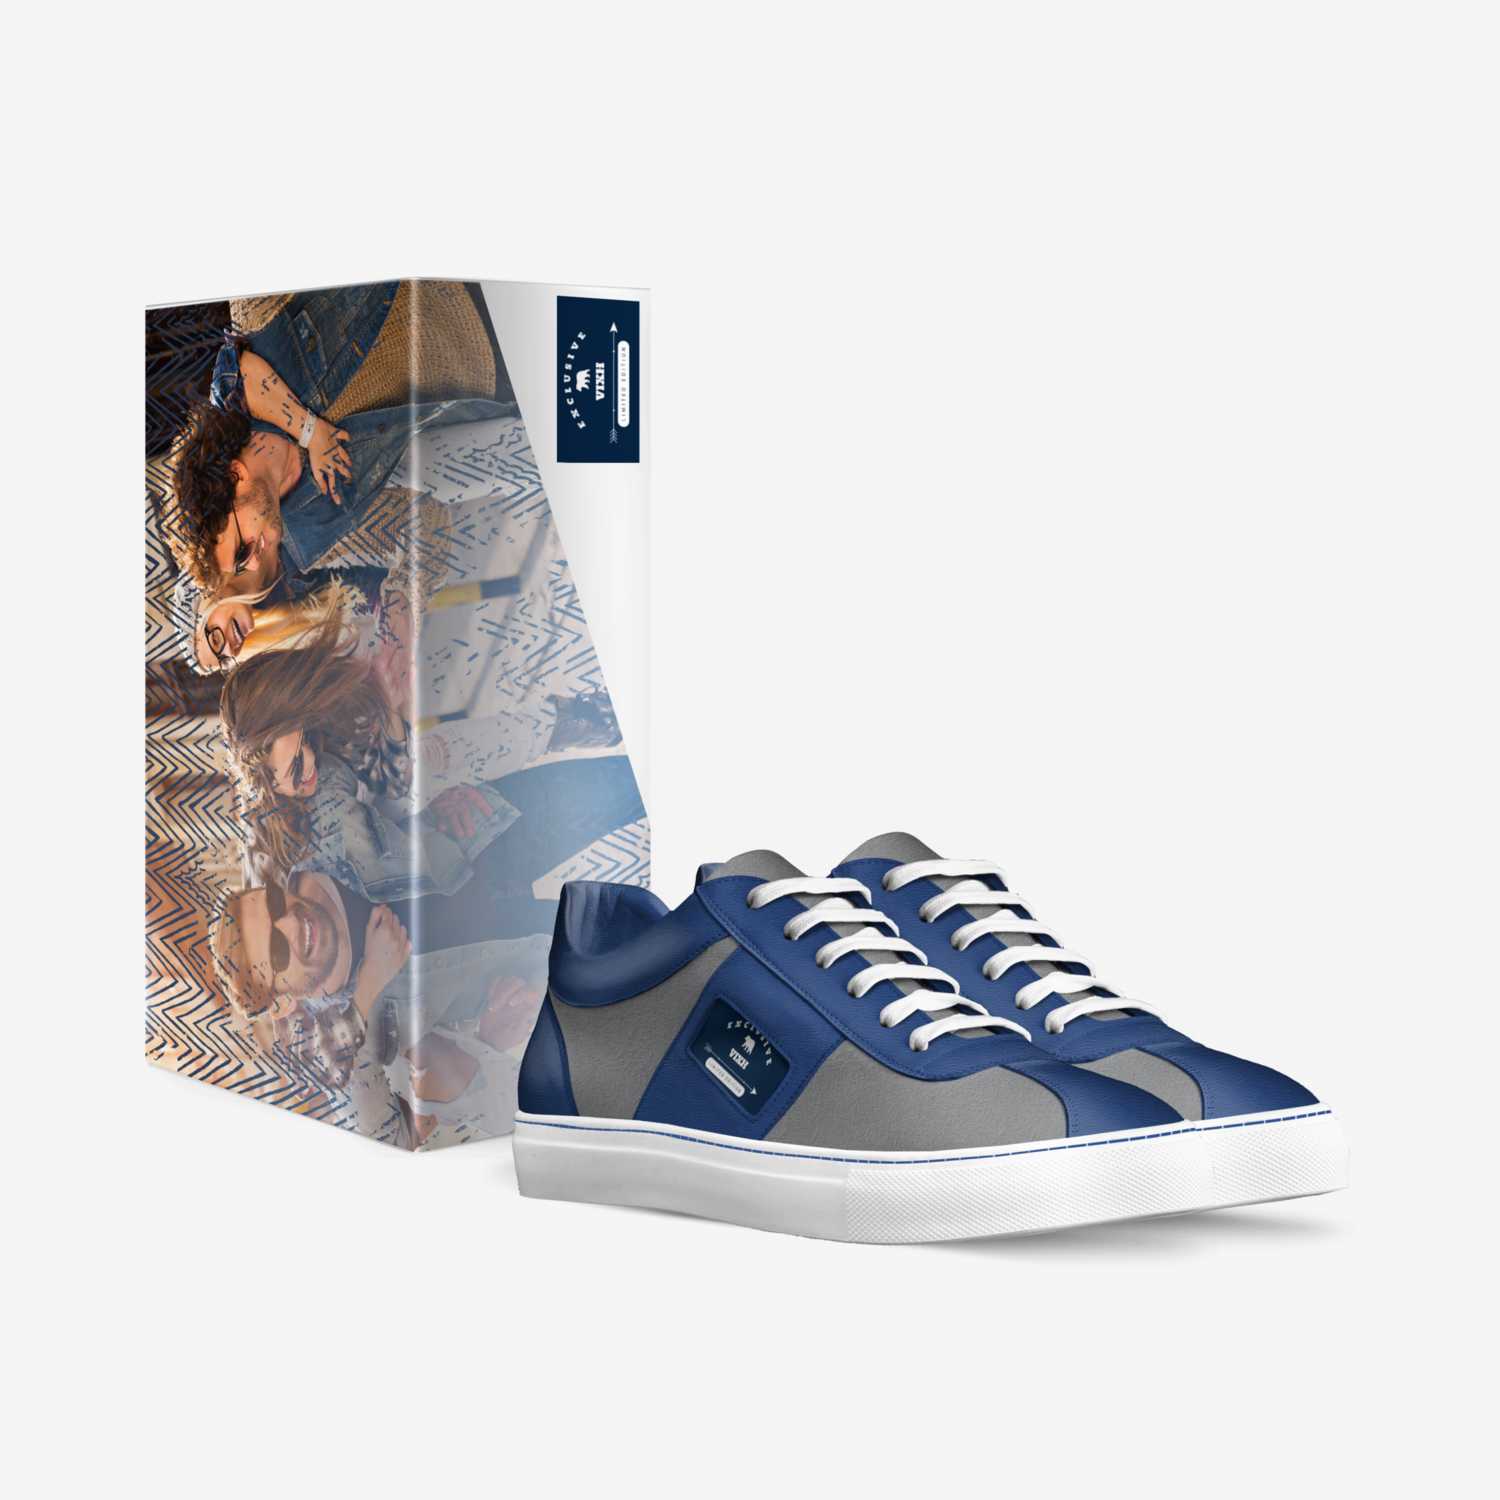 VIXH custom made in Italy shoes by Andrea E. Shillingford | Box view